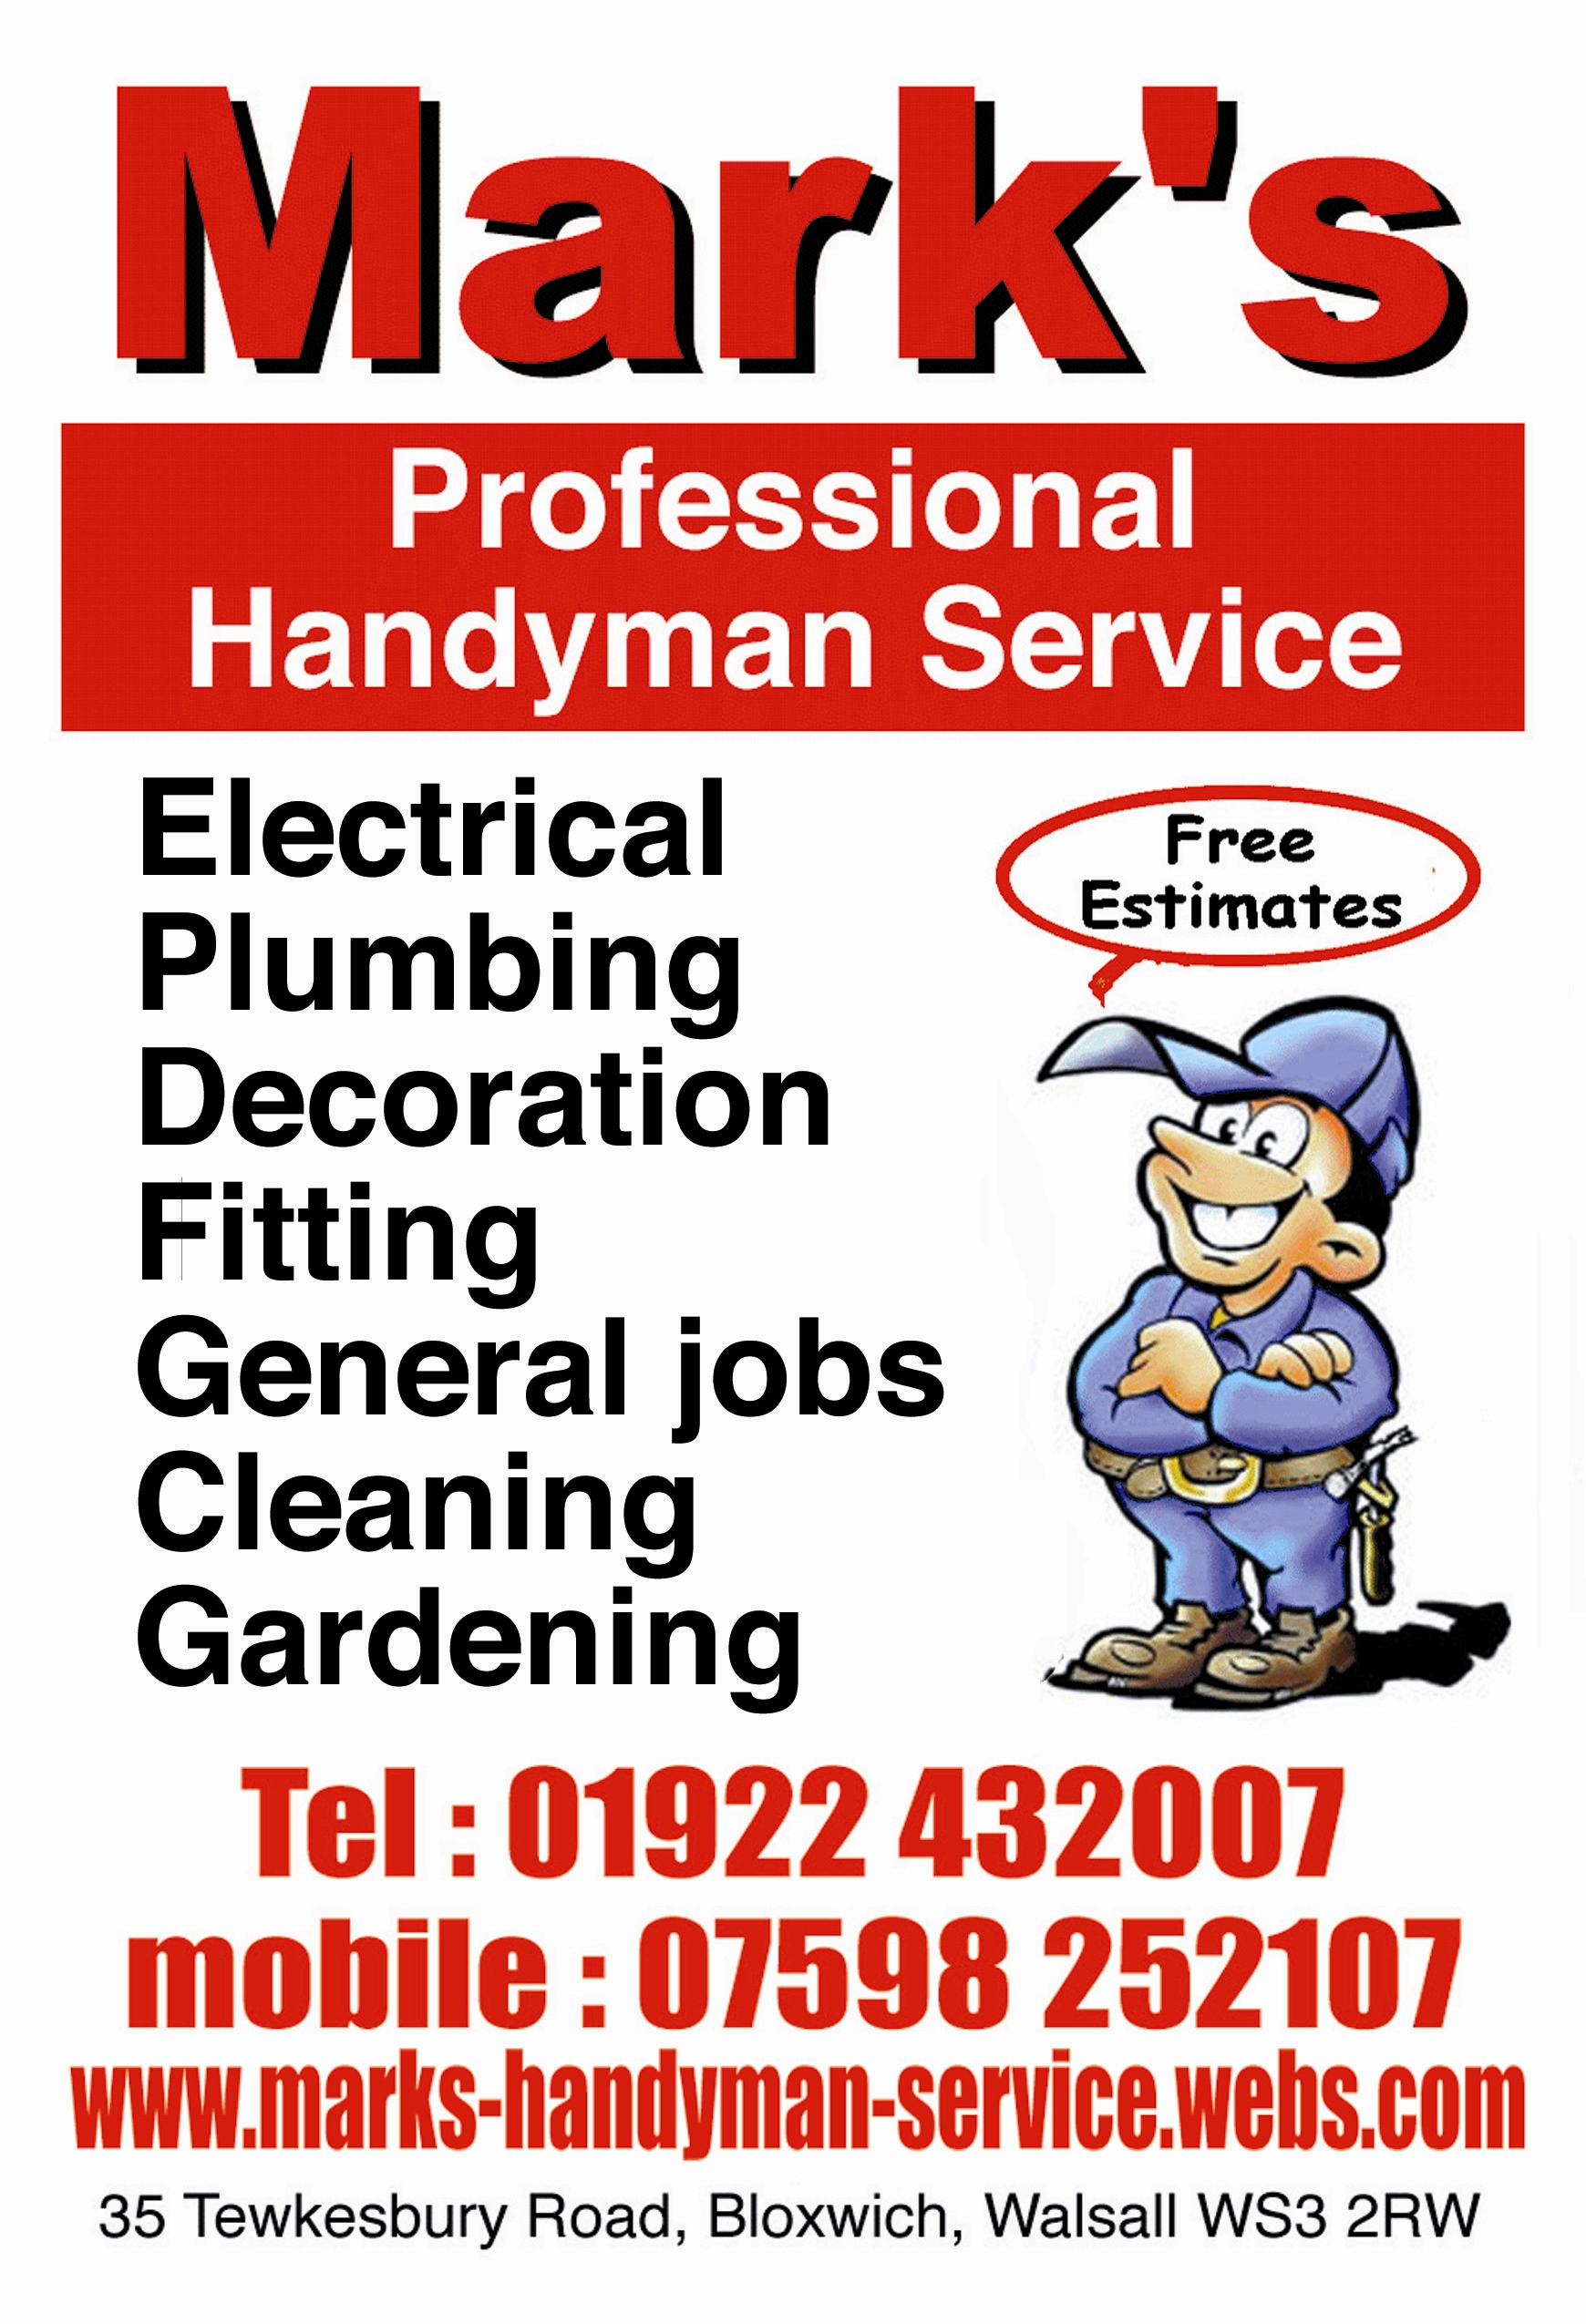 Marks Handyman Service